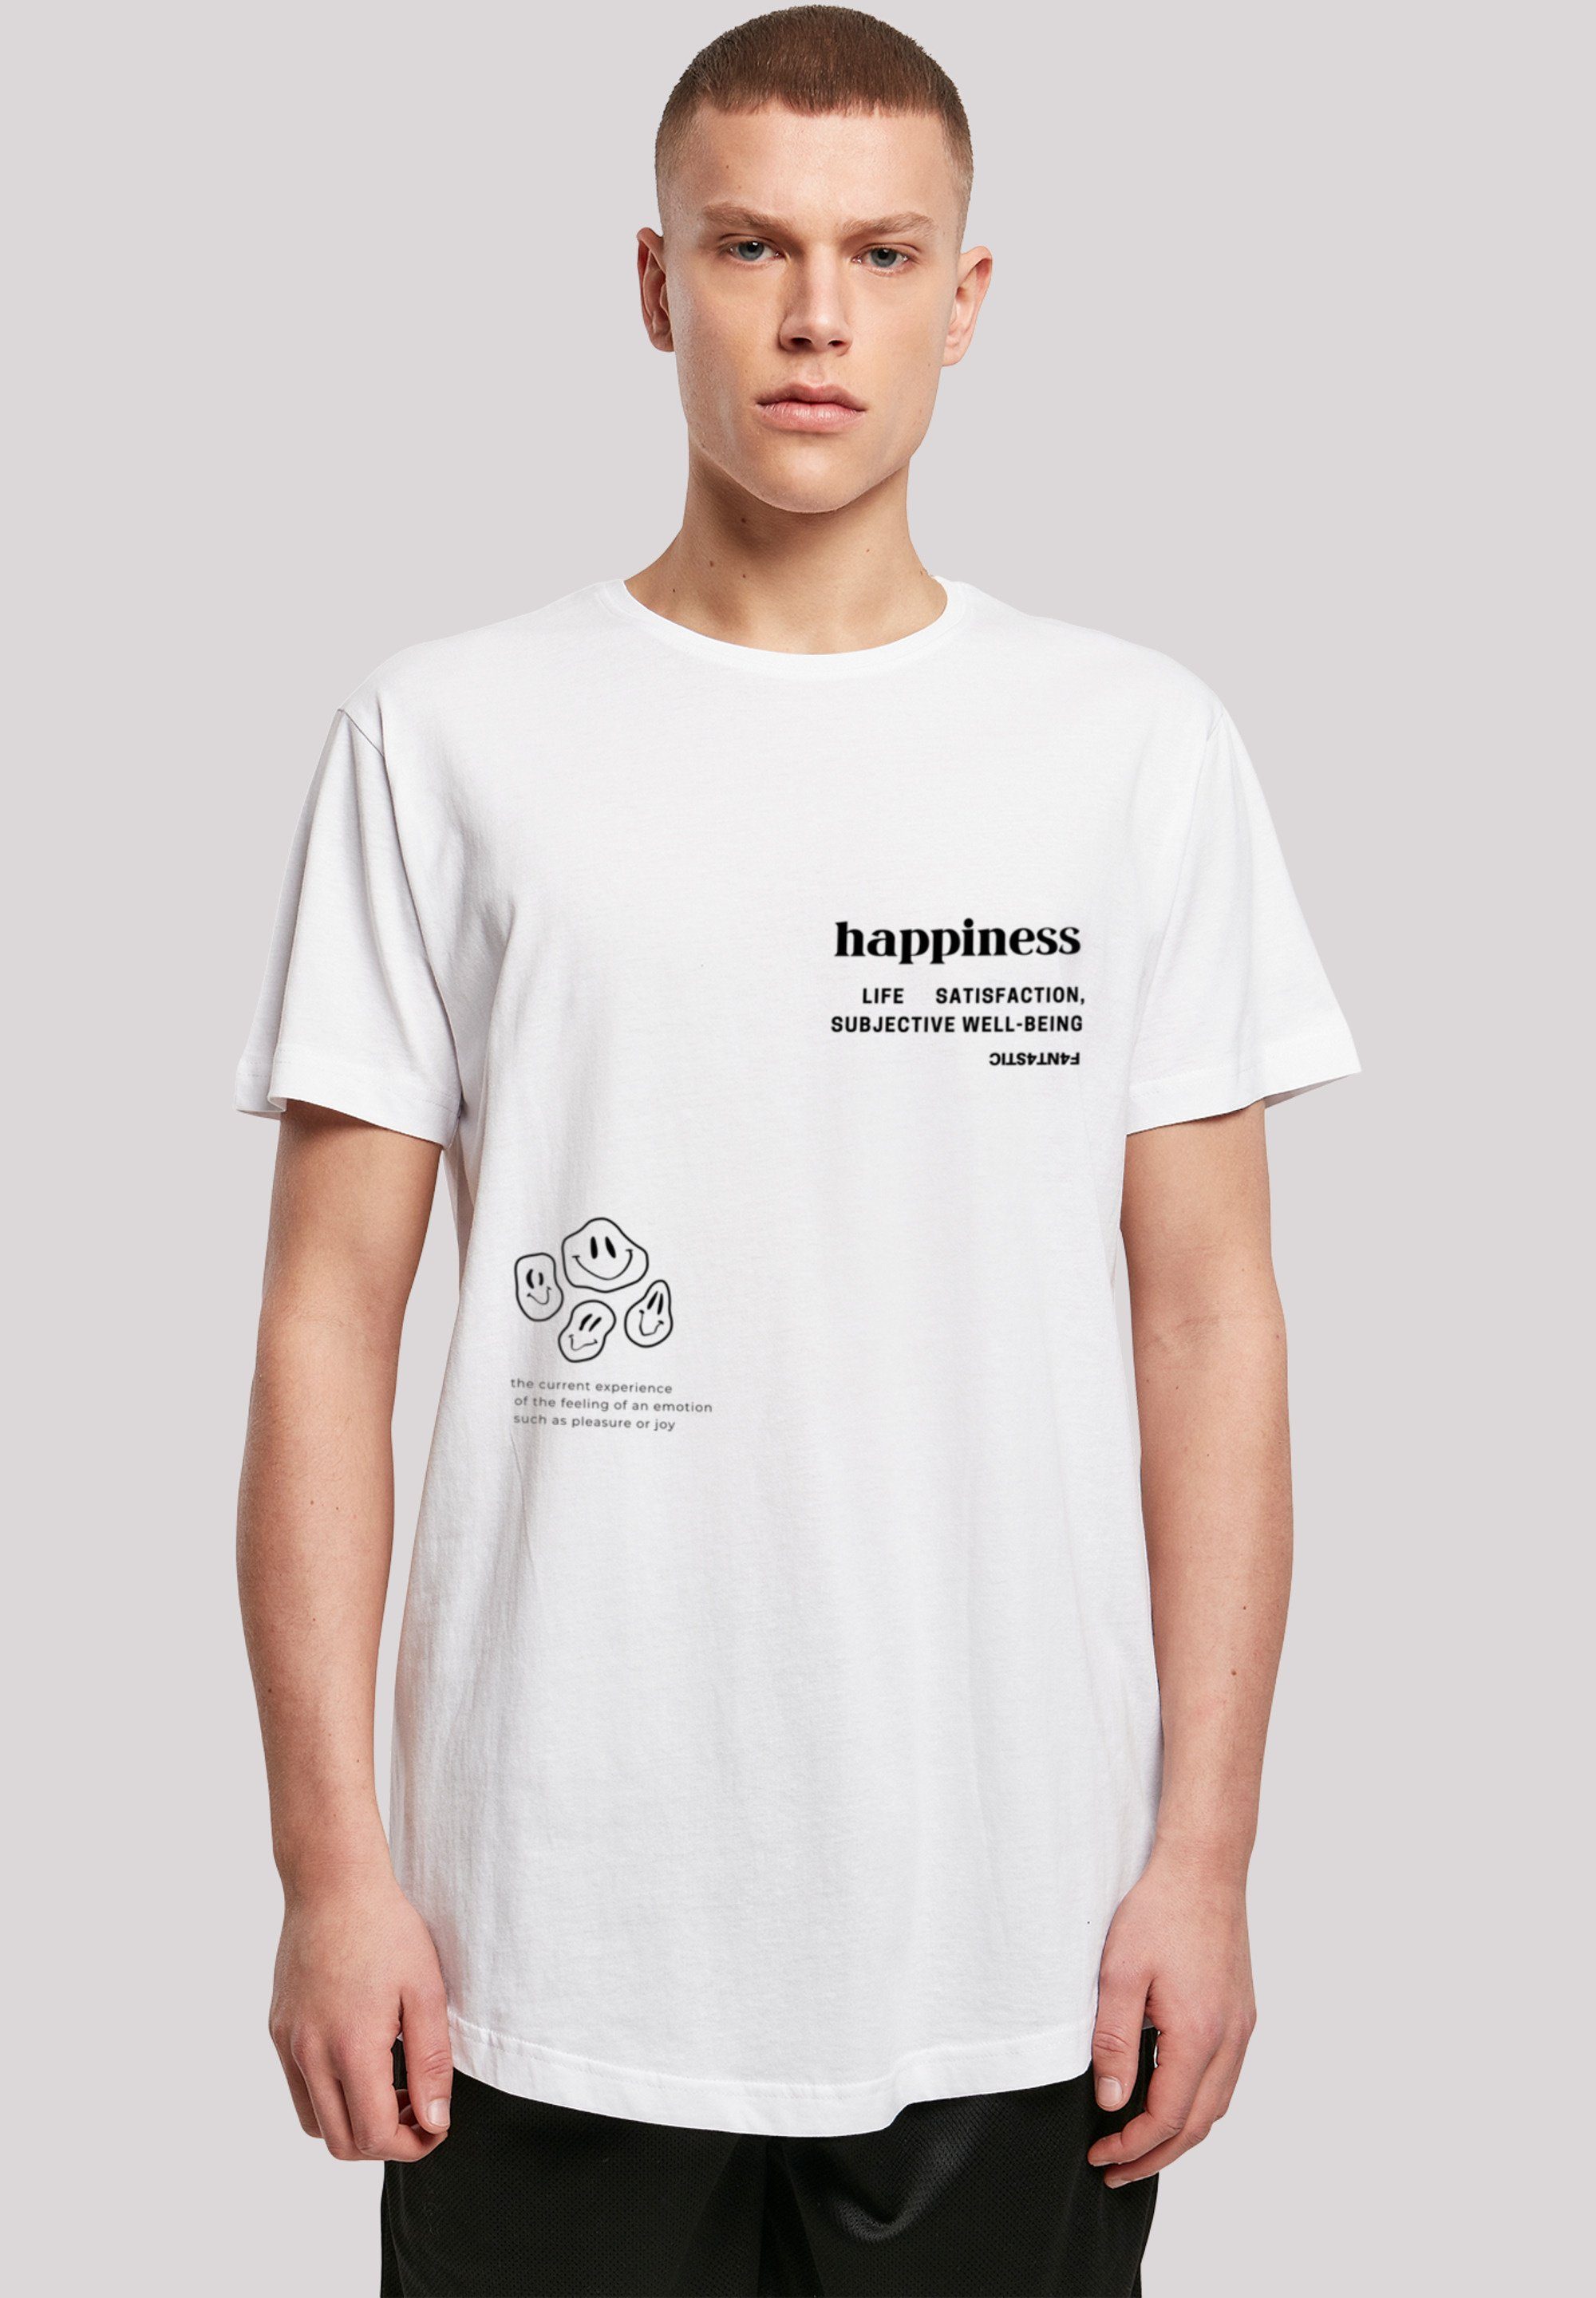 Neue Artikel im Online-Verkauf F4NT4STIC T-Shirt happiness LONG Print TEE weiß